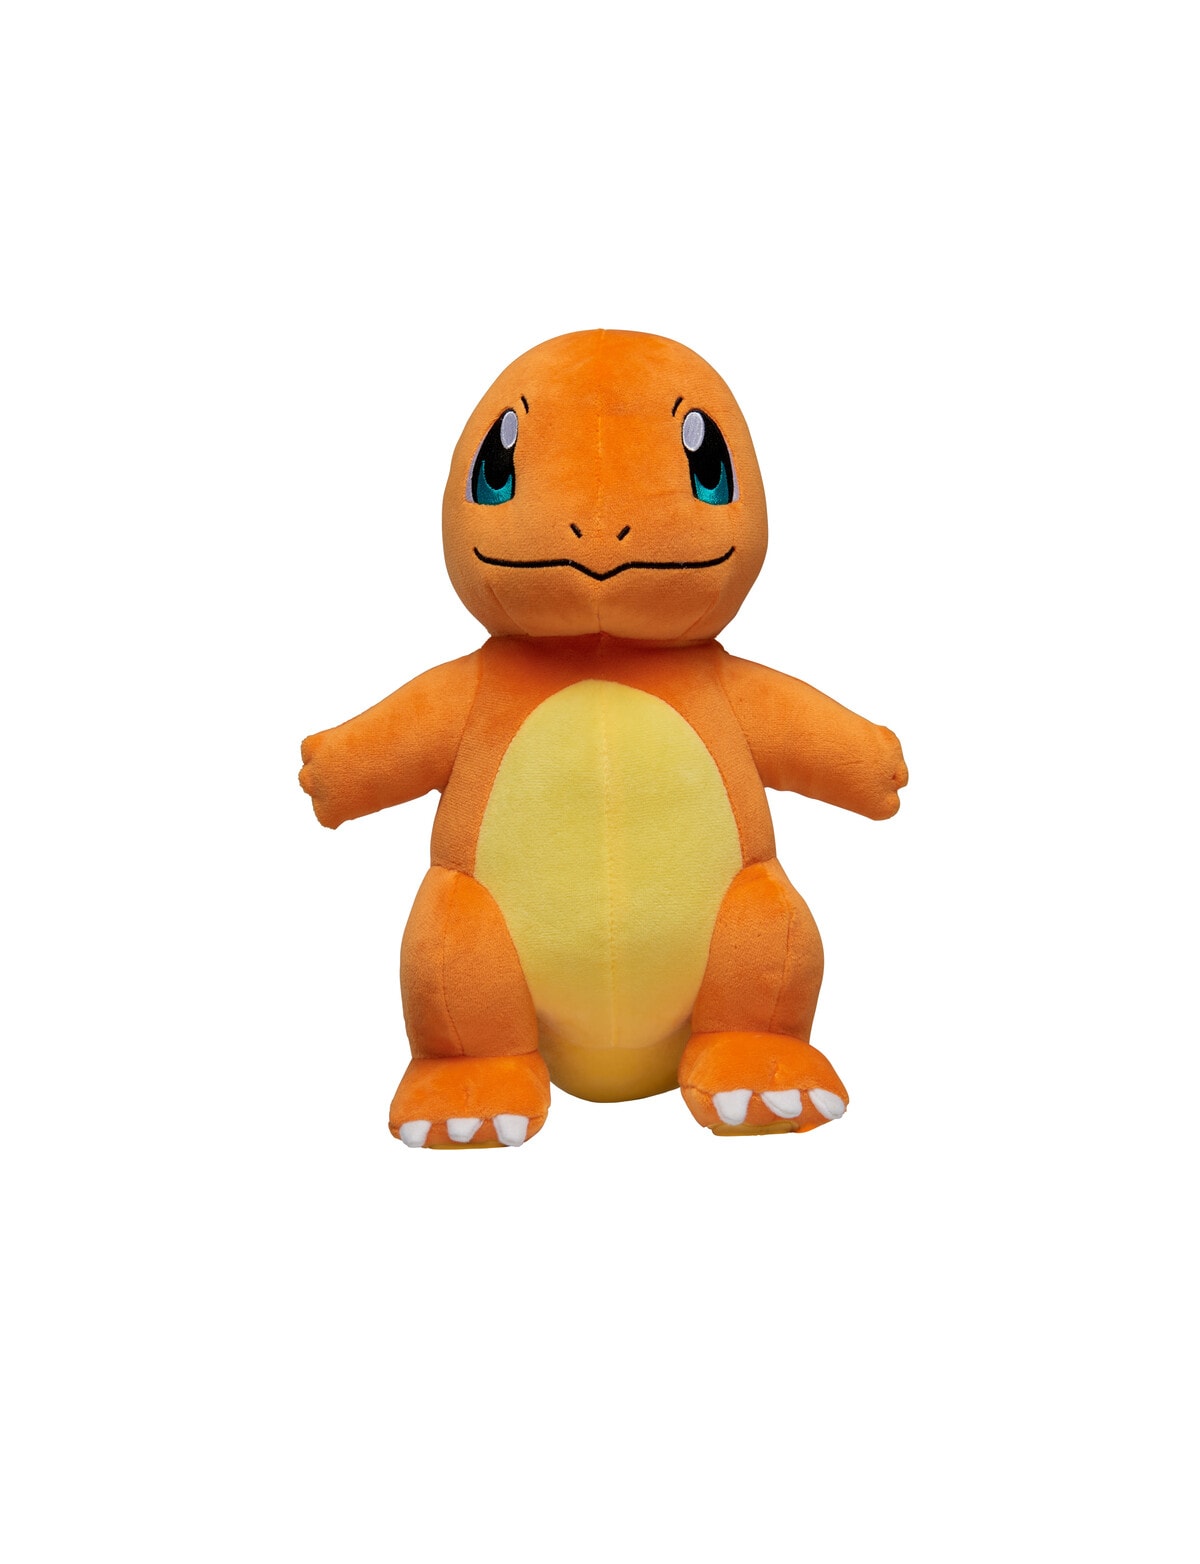 Pokémon Stuffed Animals & Plush